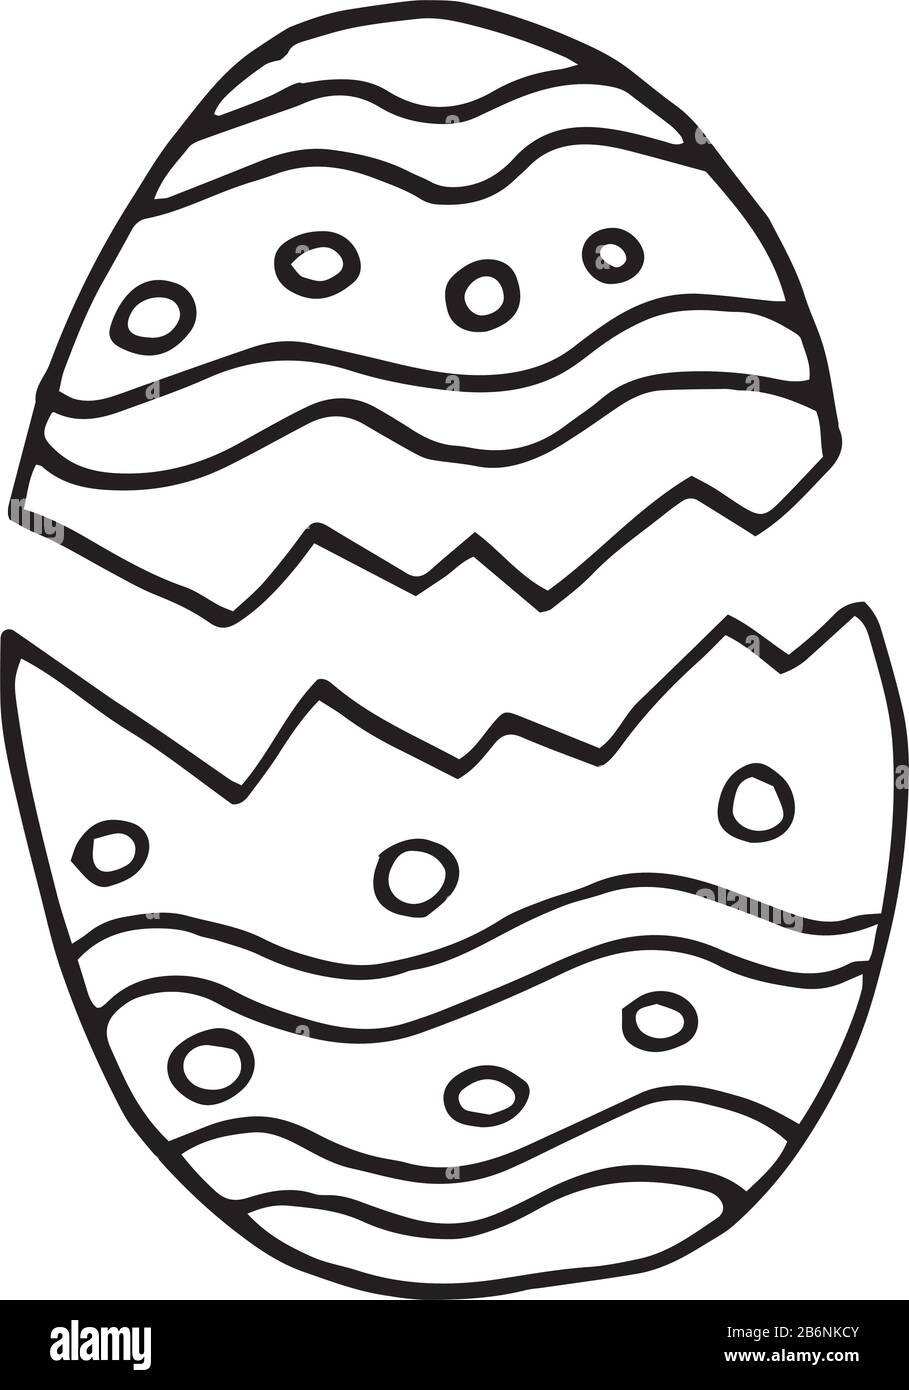 Broken Egg With Pattern Line Art Hand Drawn Illustration Stock Vector Image Art Alamy